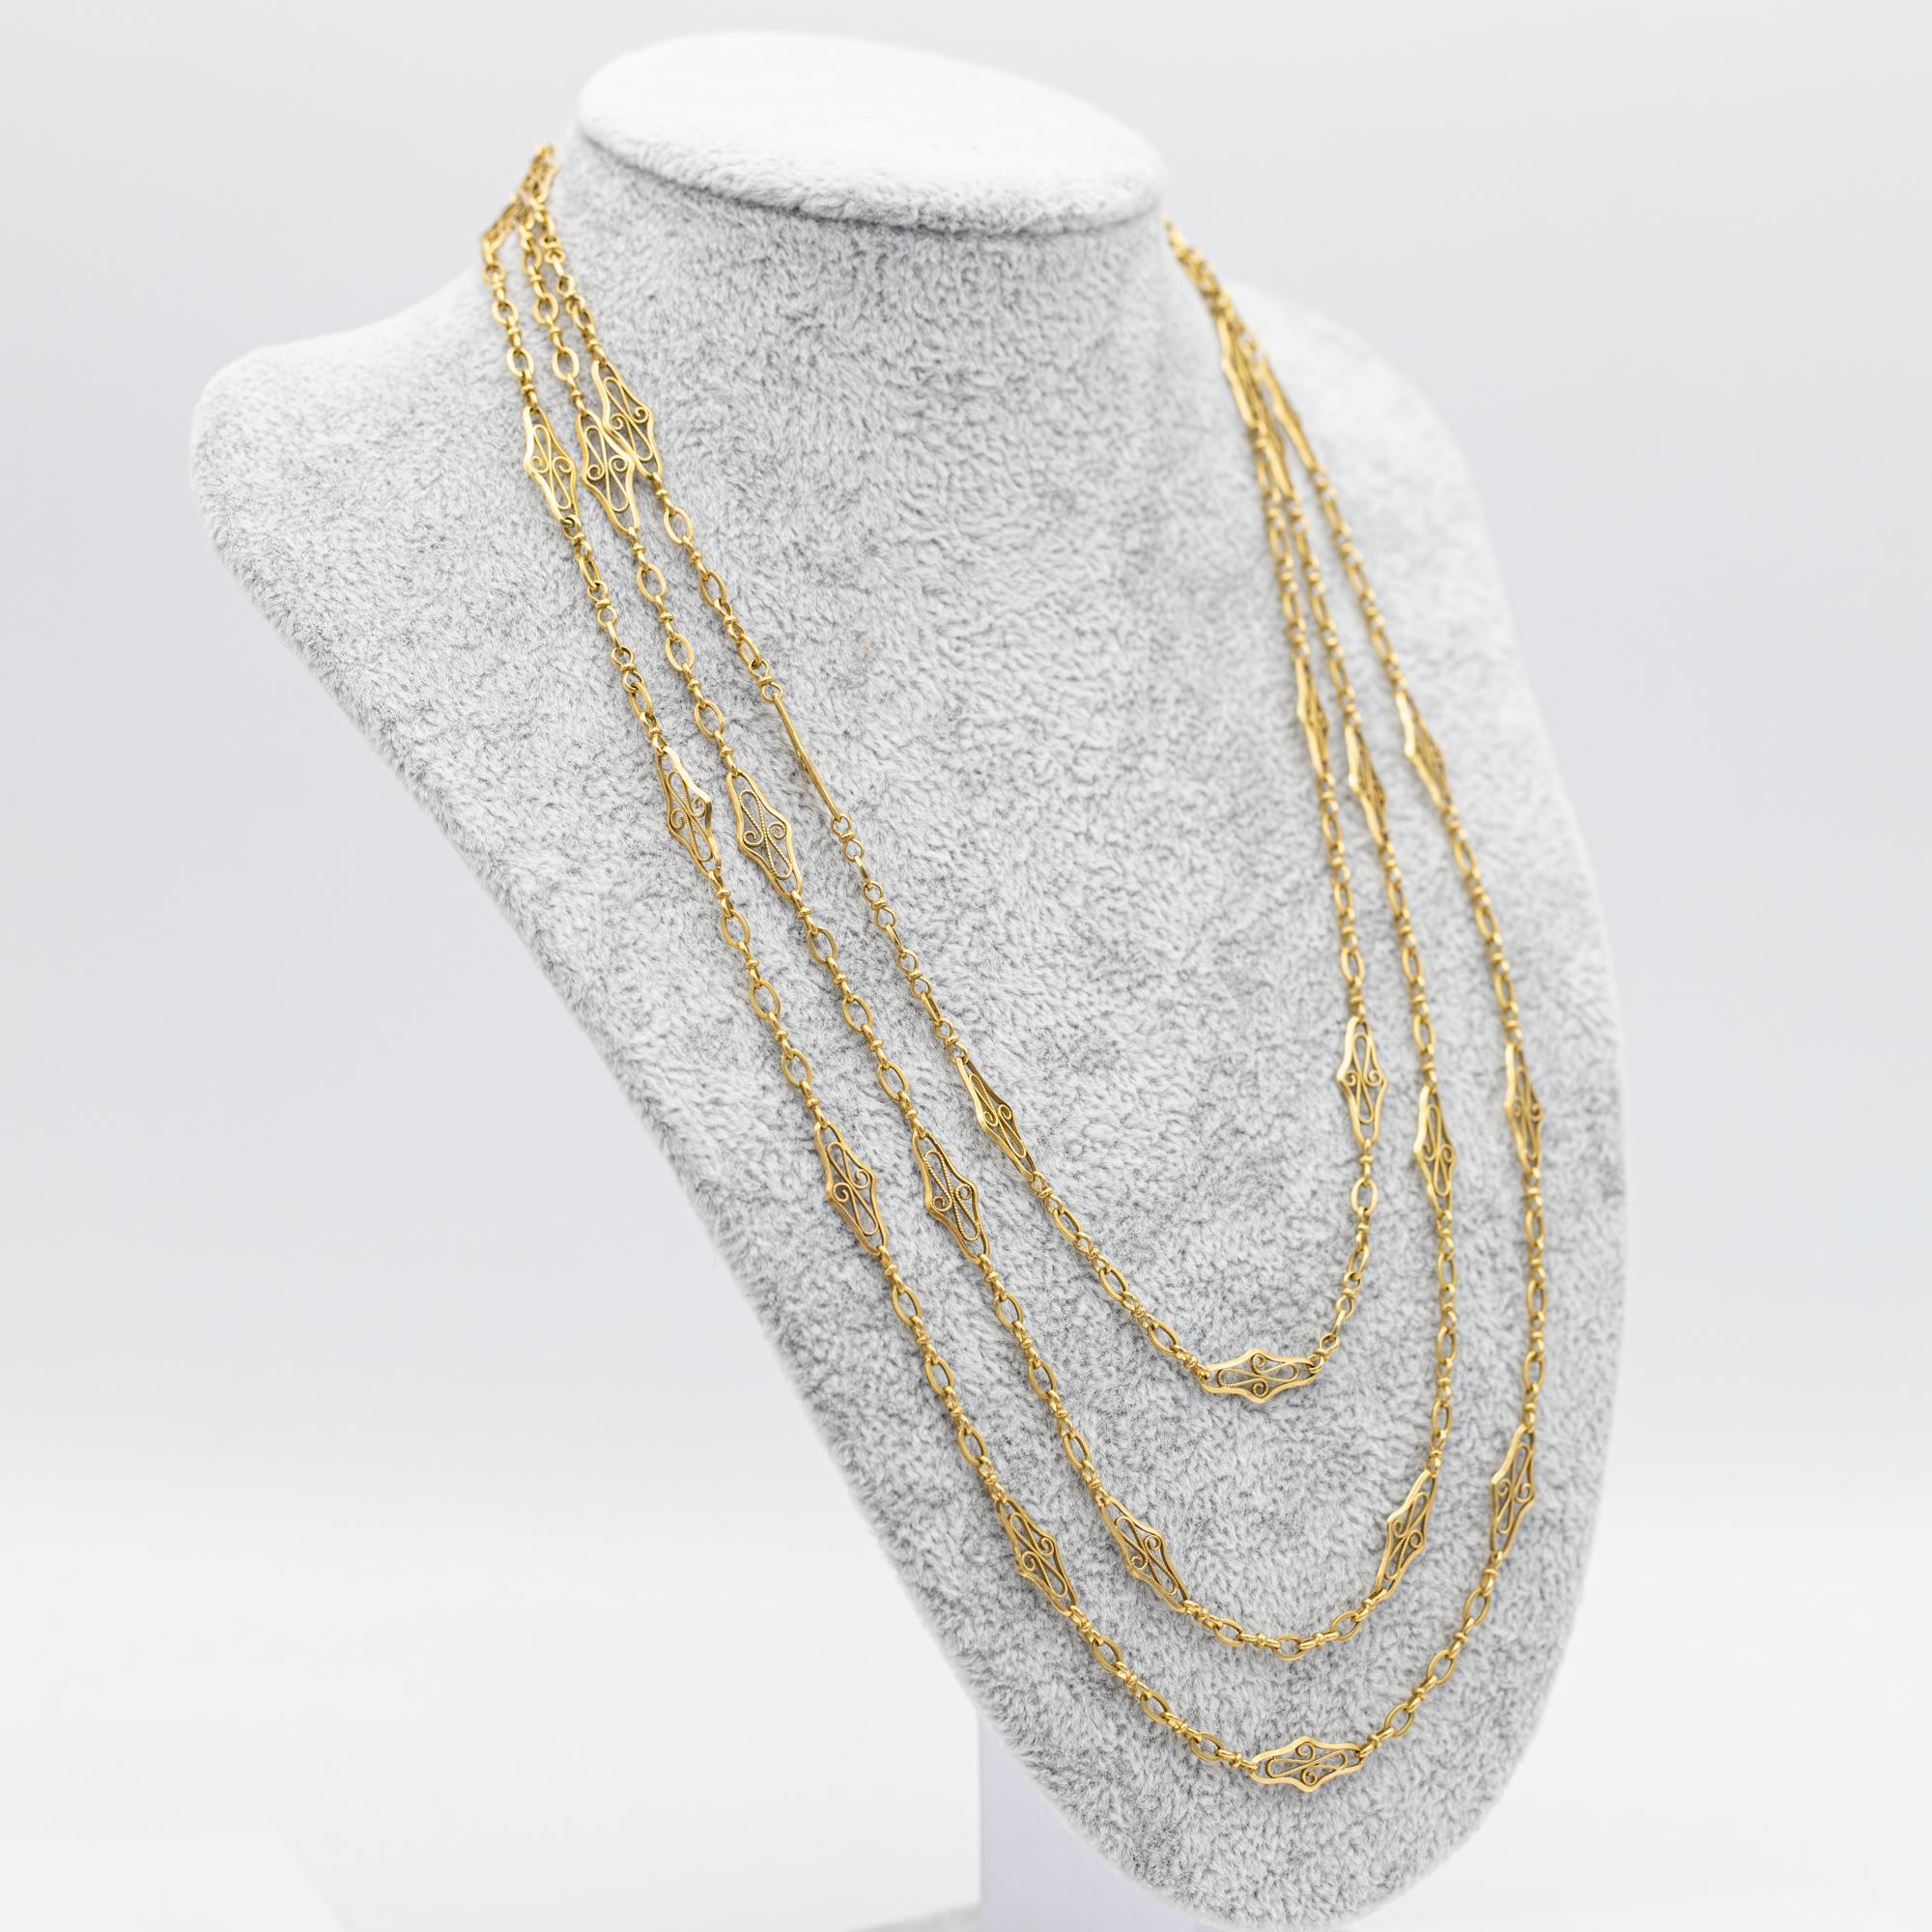 Antique 18k gold Sautoir necklace, 157.5cm long guard, French Victorian chain For Sale 1